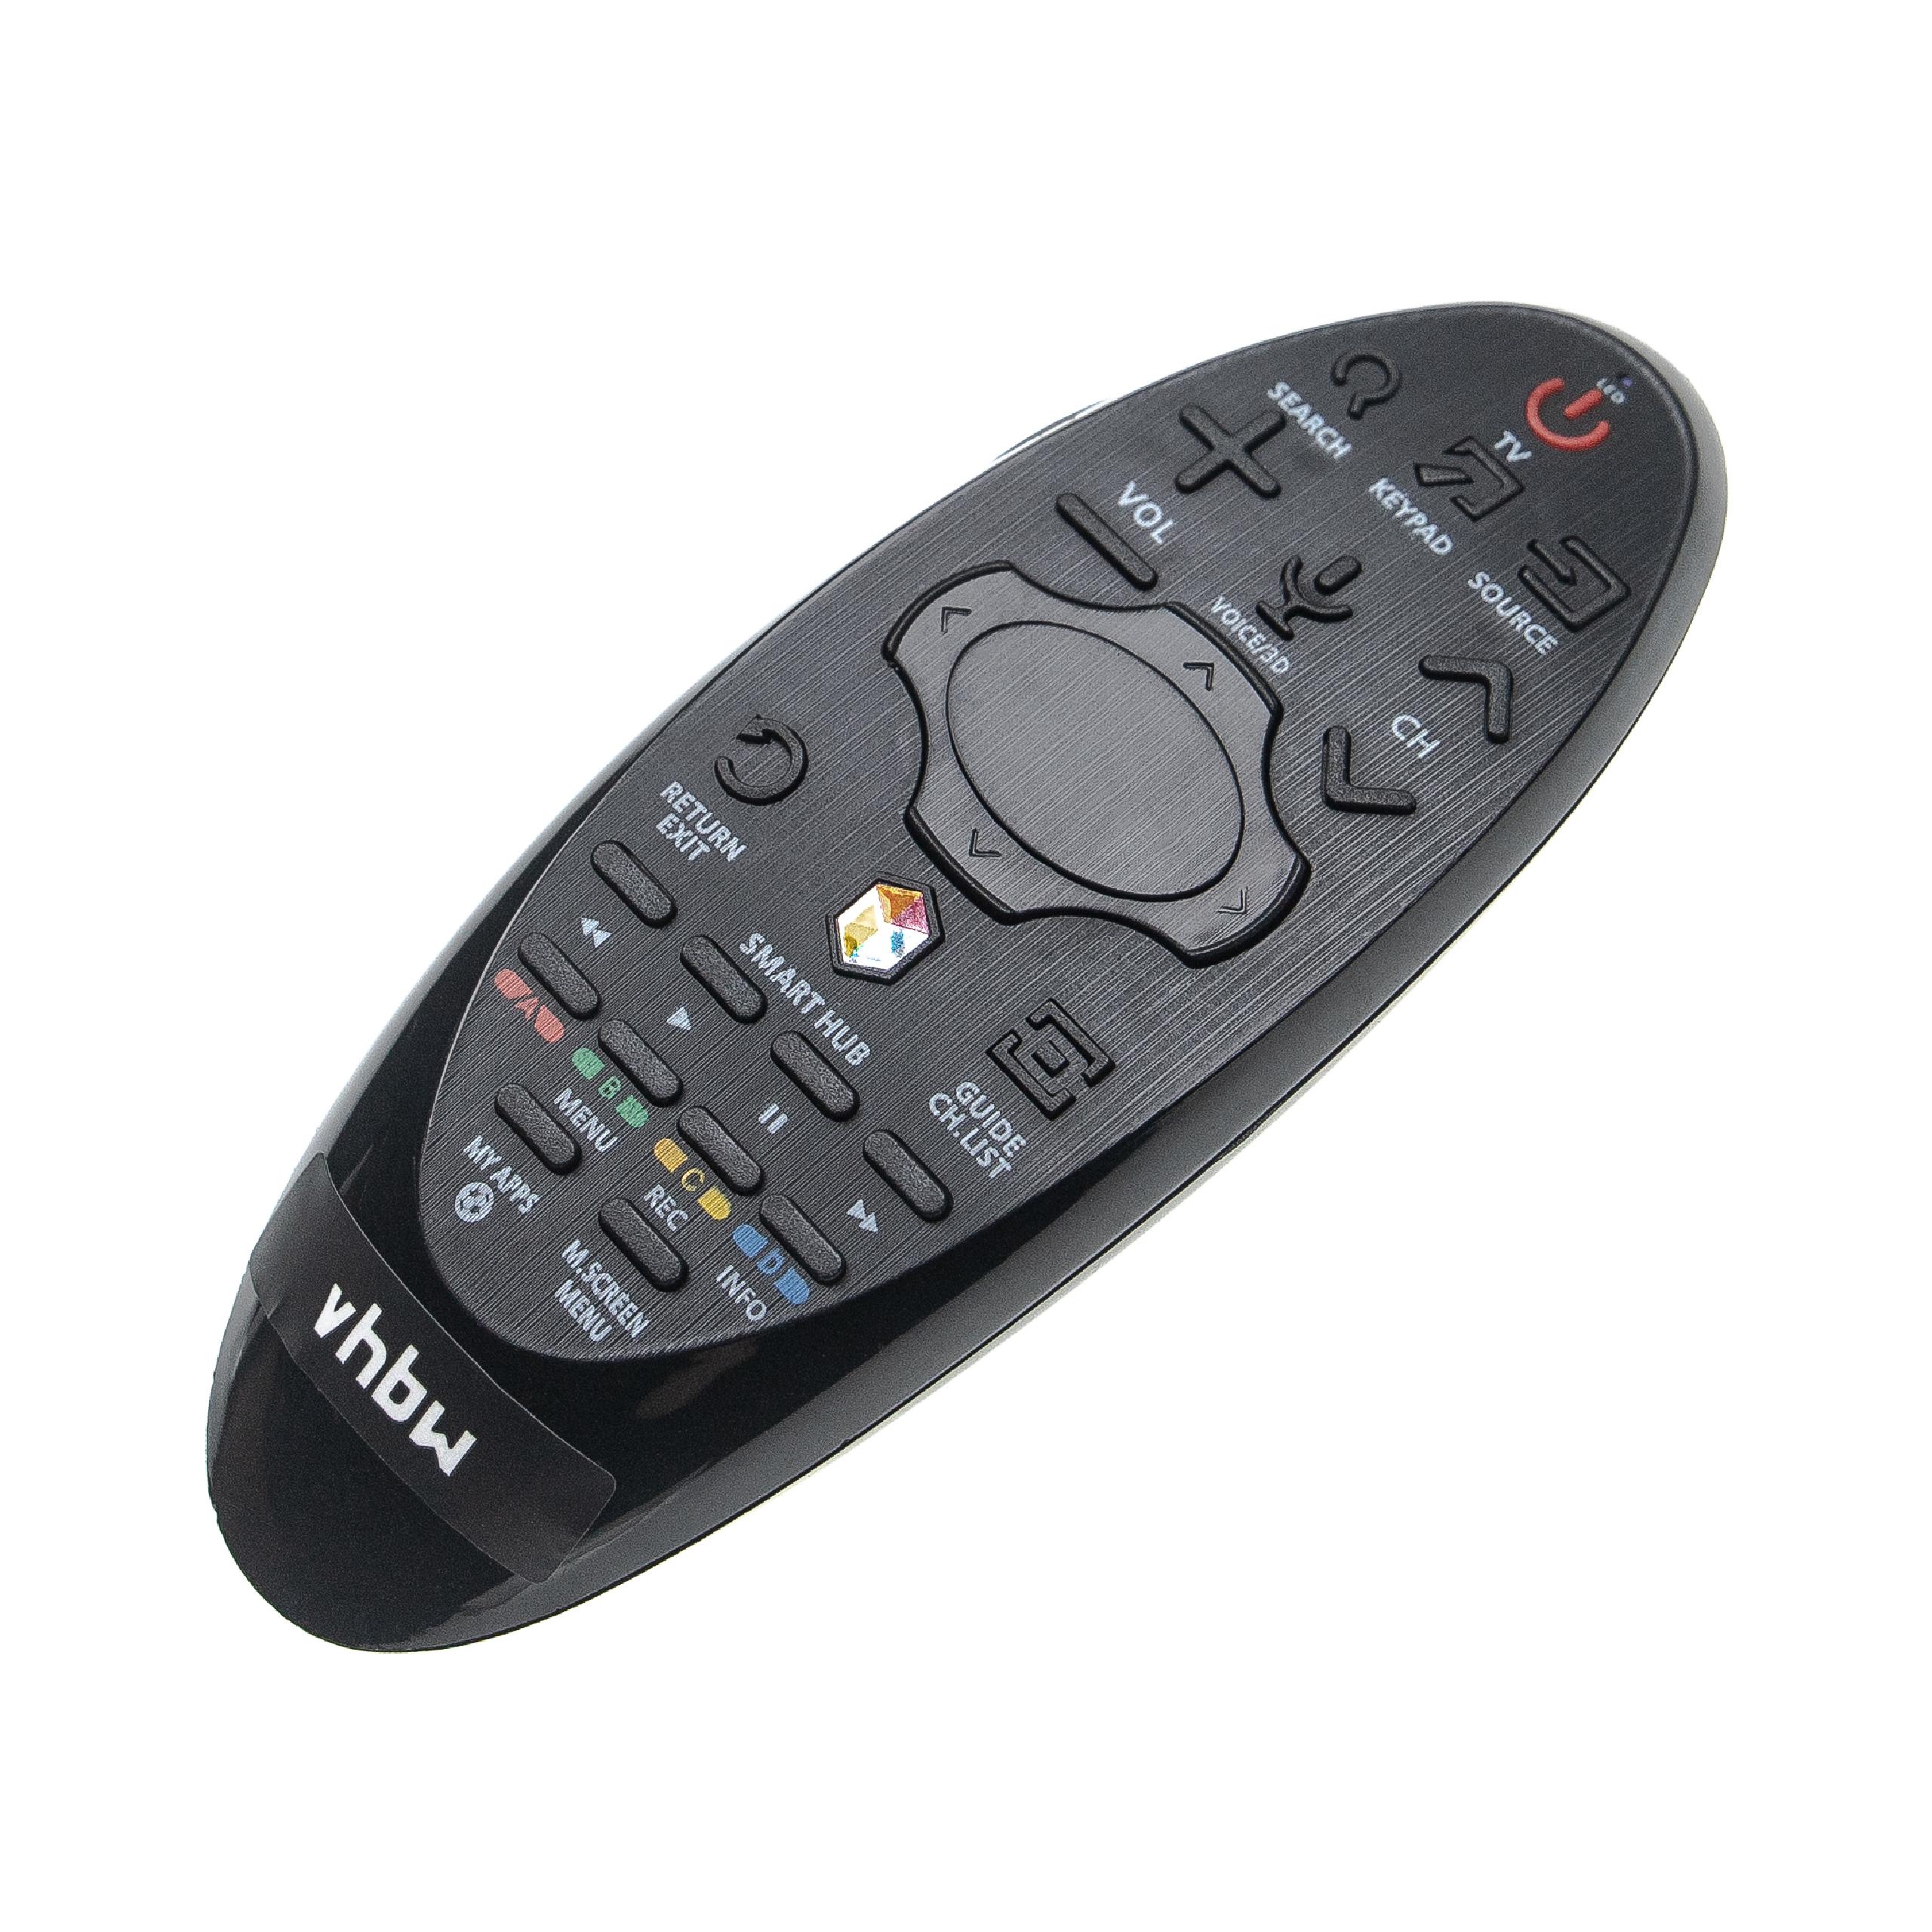 Remote Control replaces Samsung BN59-01181D, BN59-01182D, BN59-01184D, BN59-01185A, BN59-01185D for Samsung TV